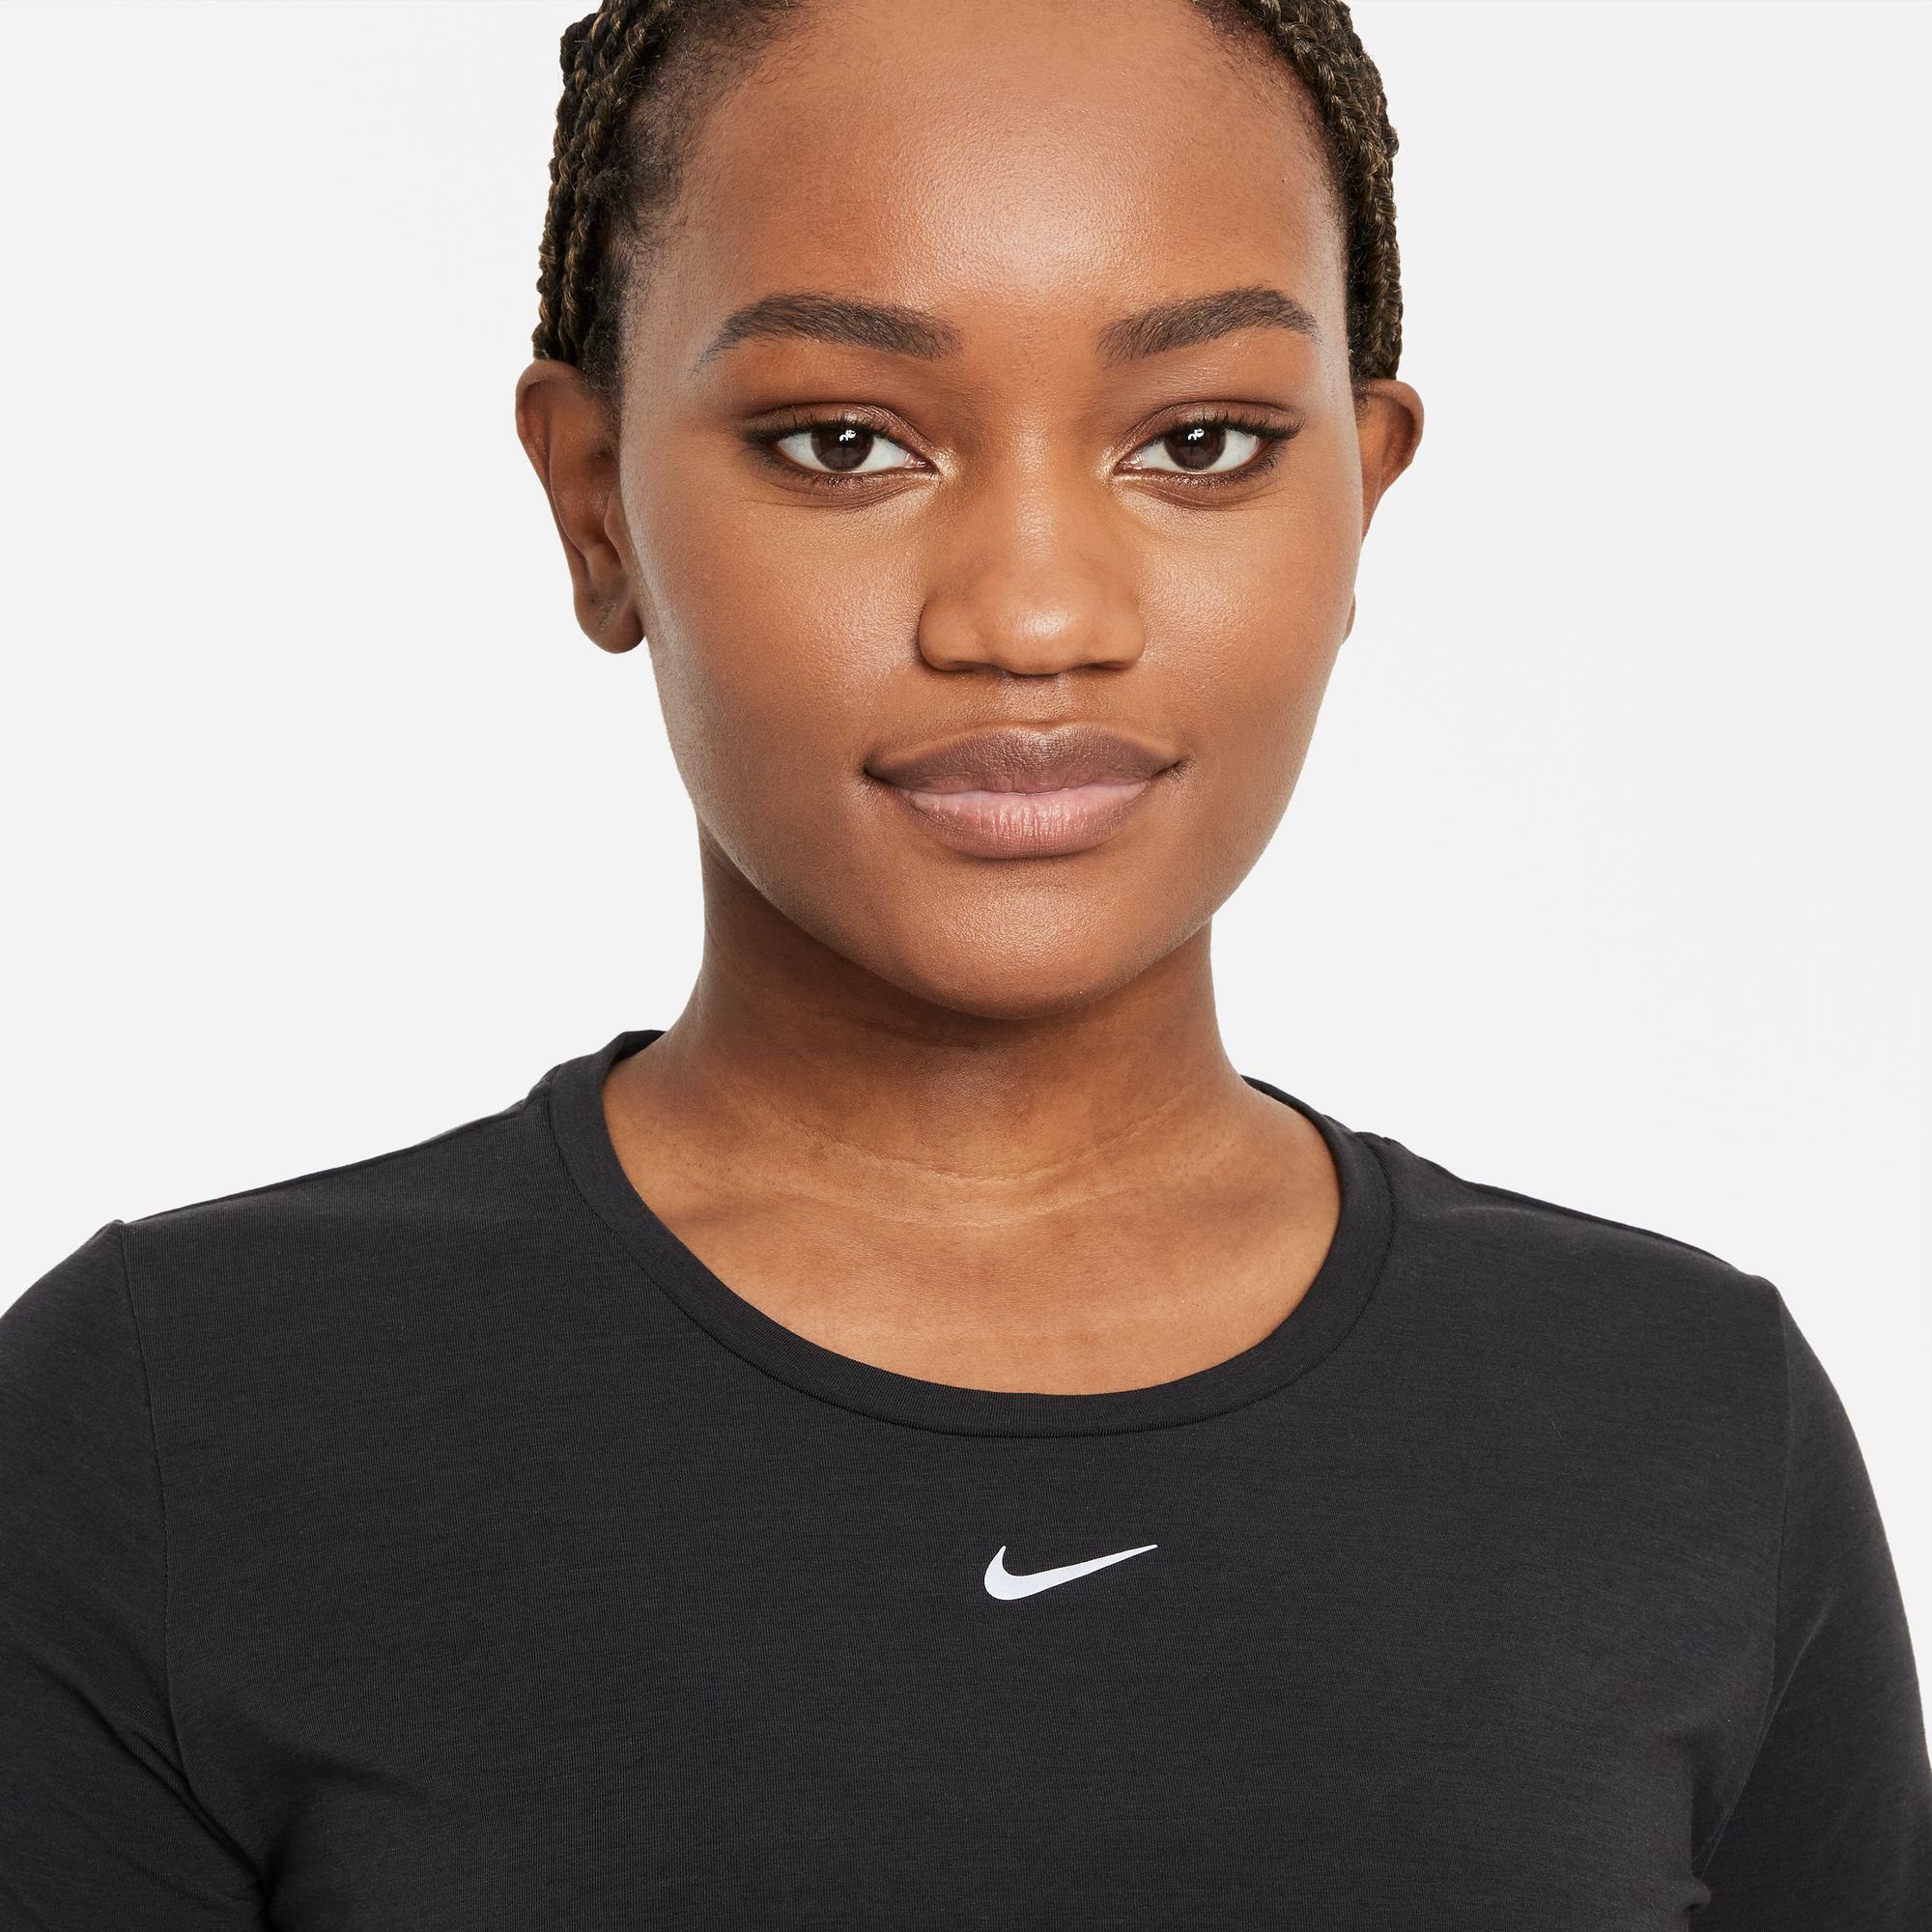 Nike Trainingsshirt DRI-FIT UV WOMEN'S schwarz TOP FIT LUXE STANDARD ONE SHORT-SLEEVE